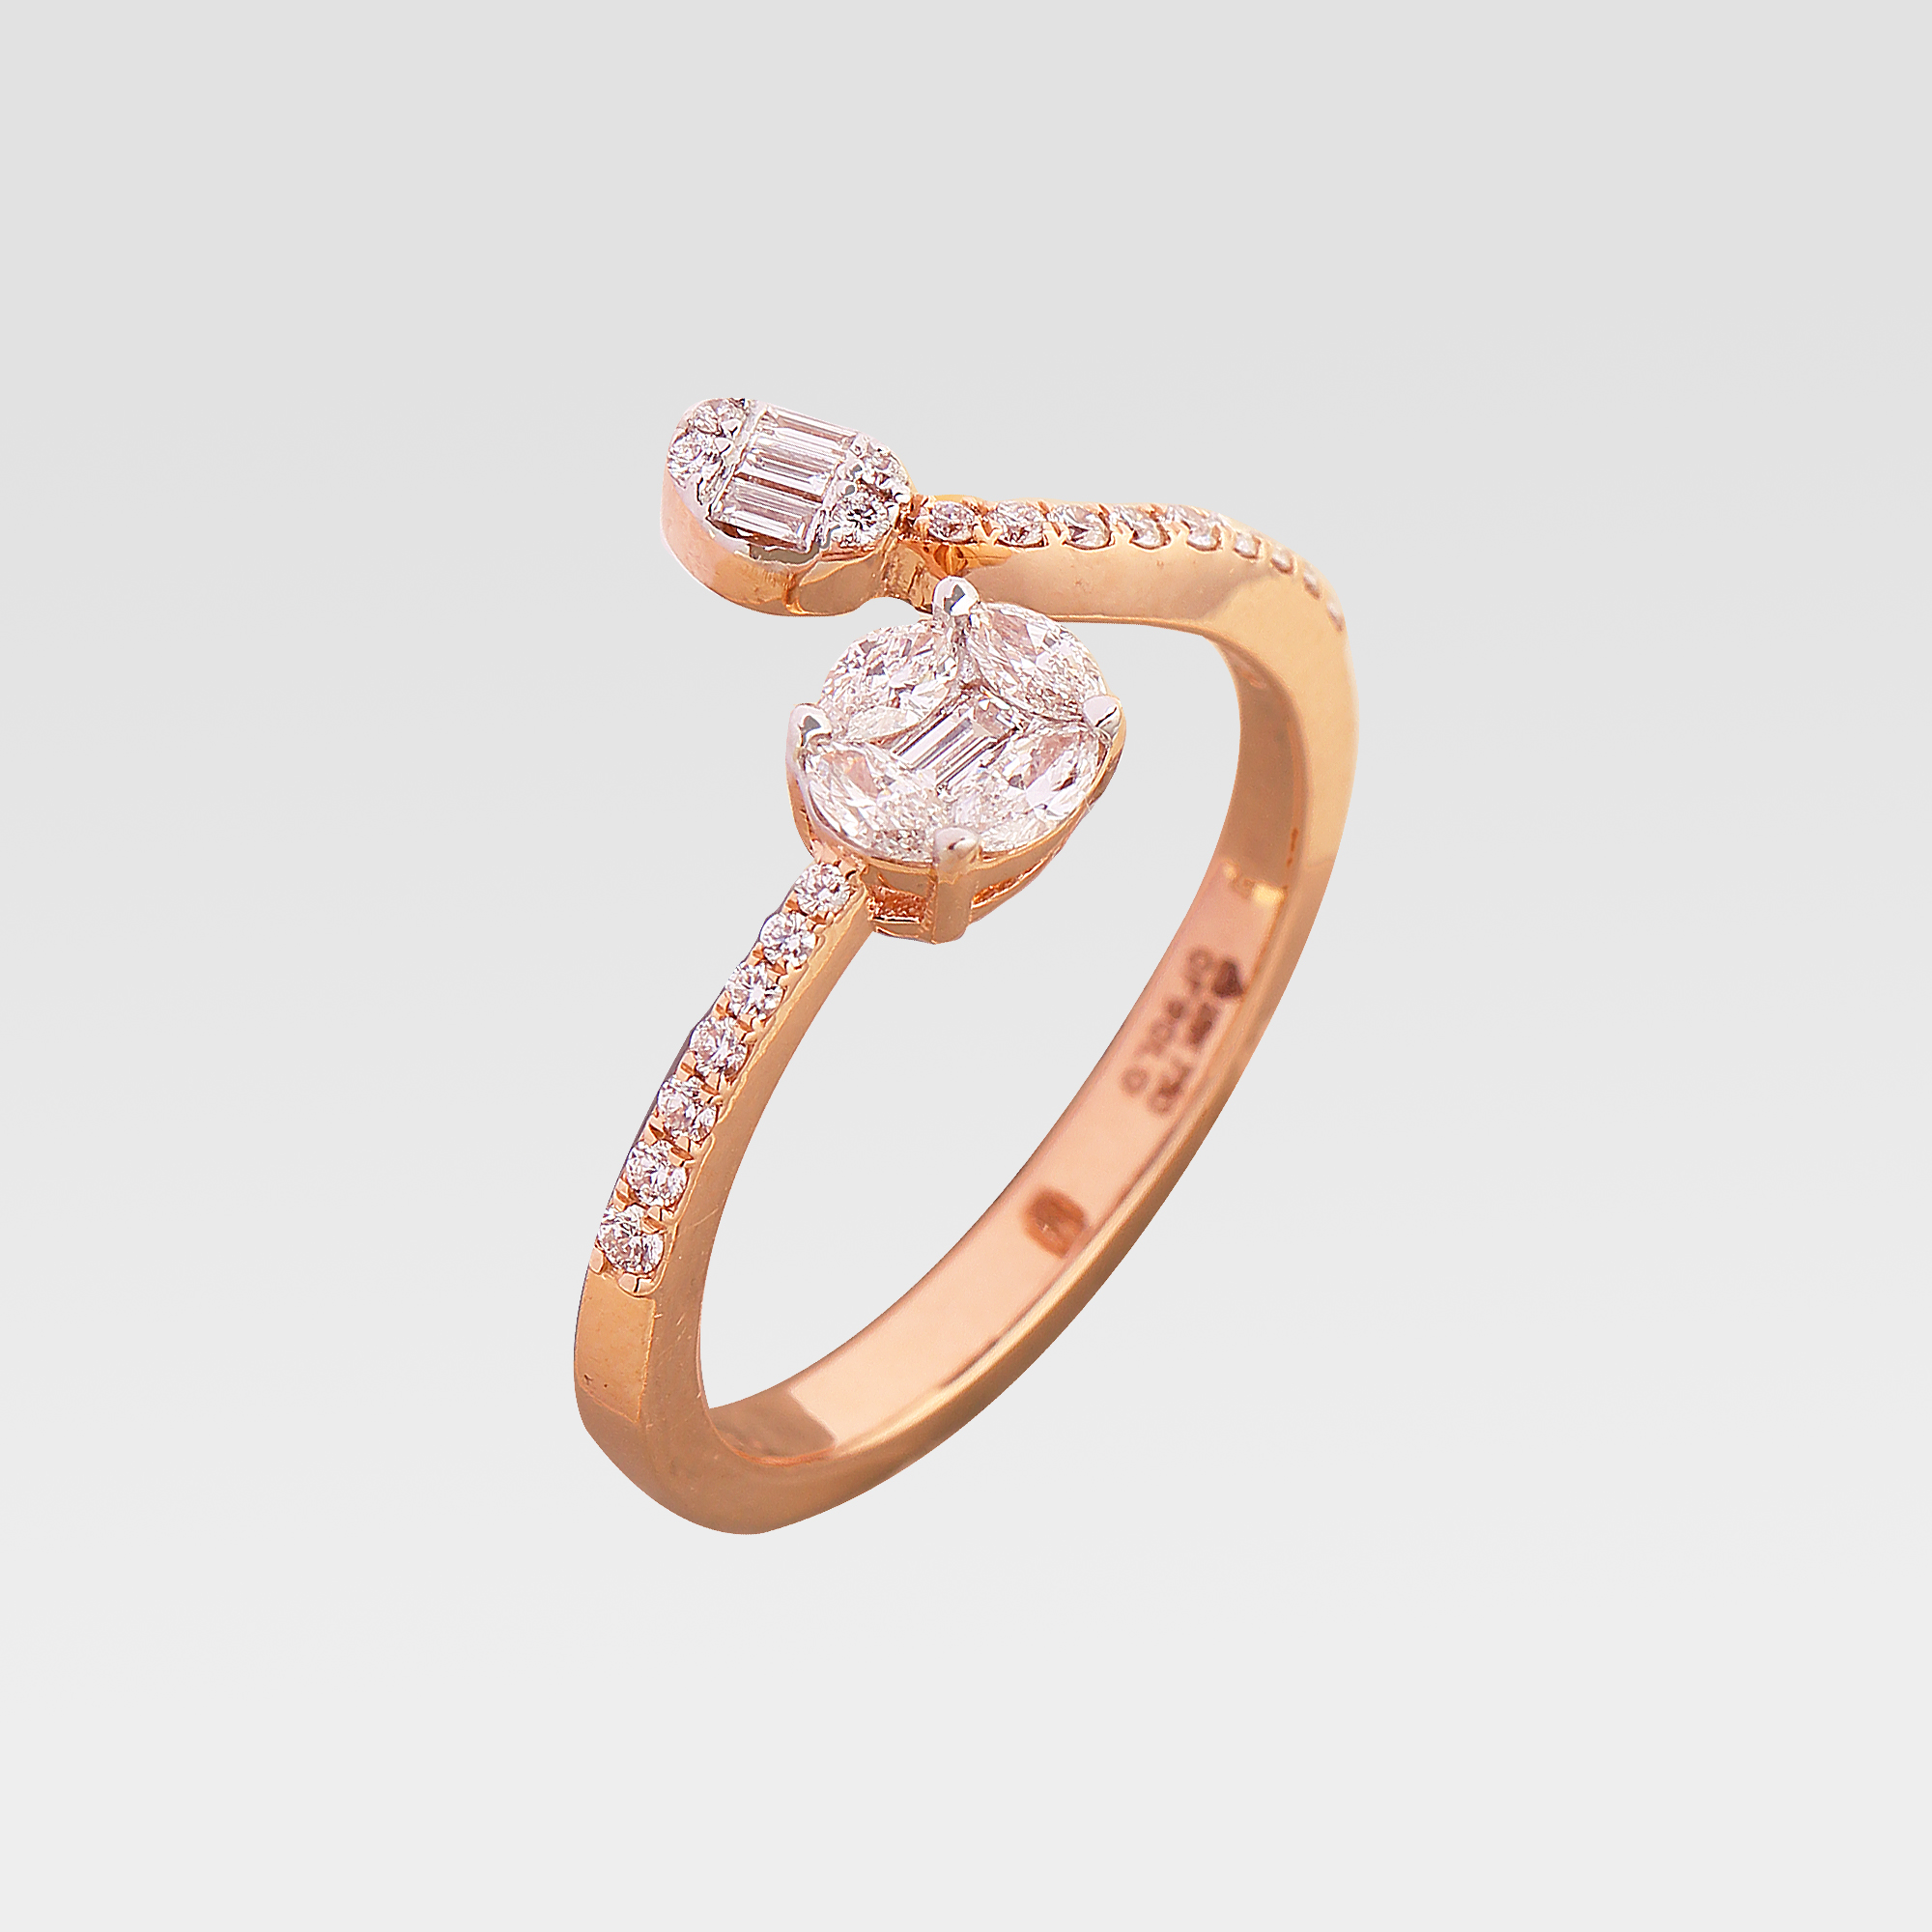 Translucent diamond ring